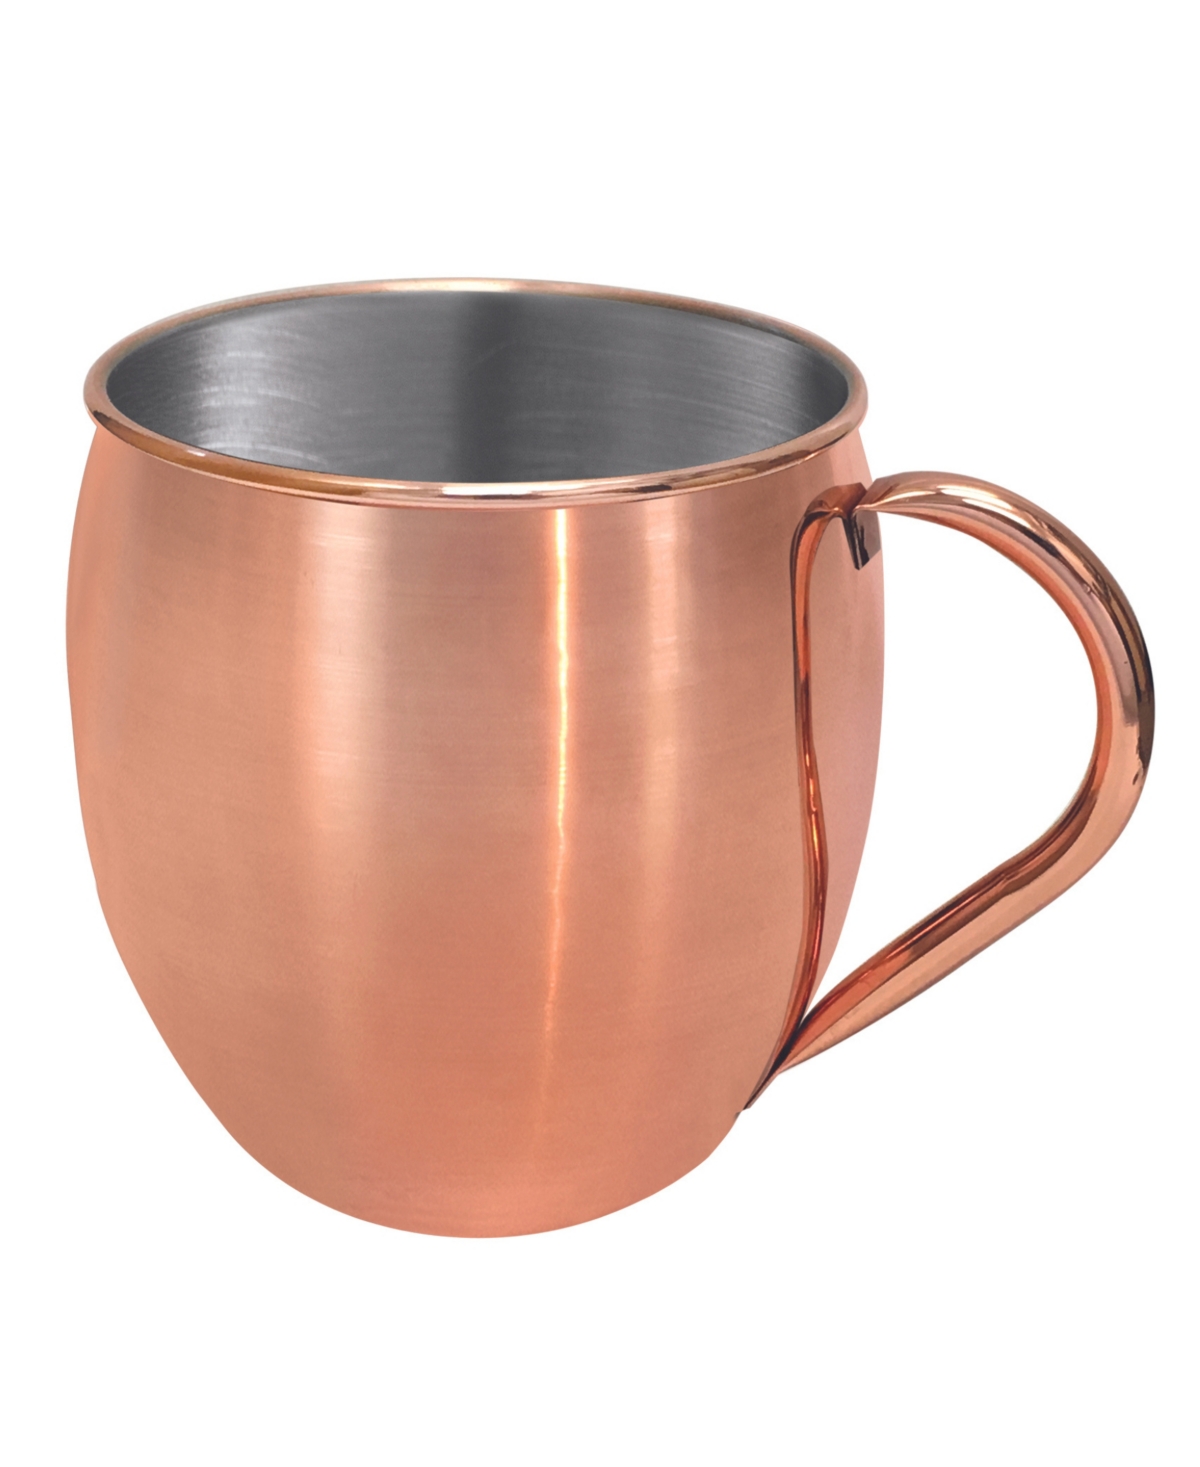 Oggi Jumbo 3 Litre Moscow Mule Mug In Copper